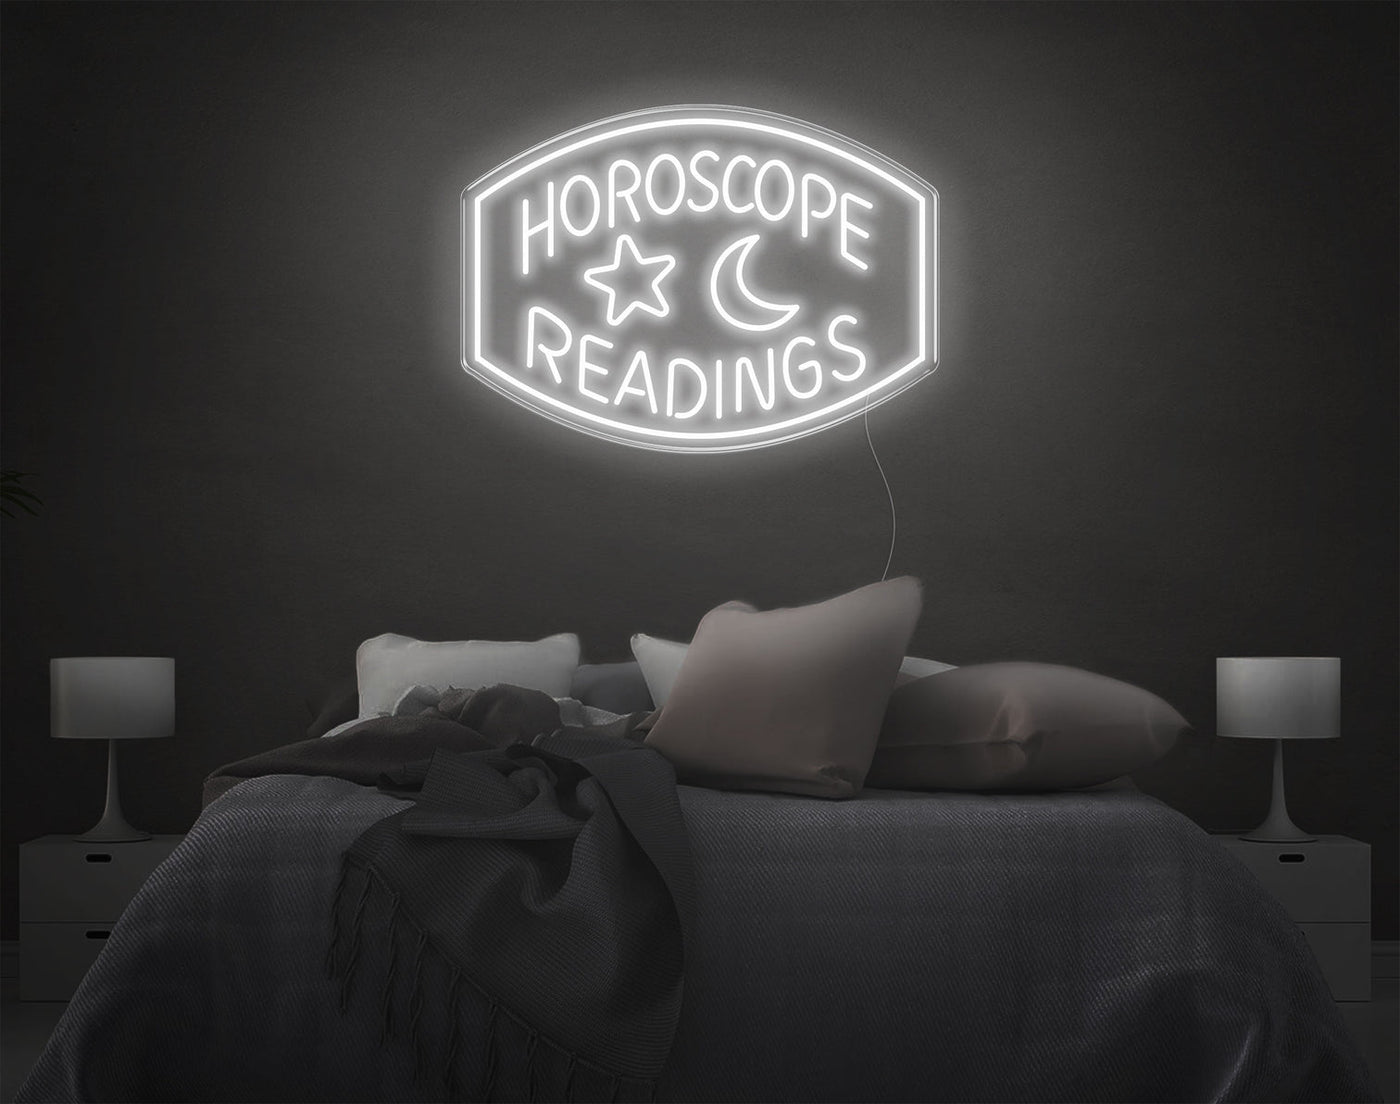 Horoscope Readings LED Neon Sign - 20inch x 28inchWhite